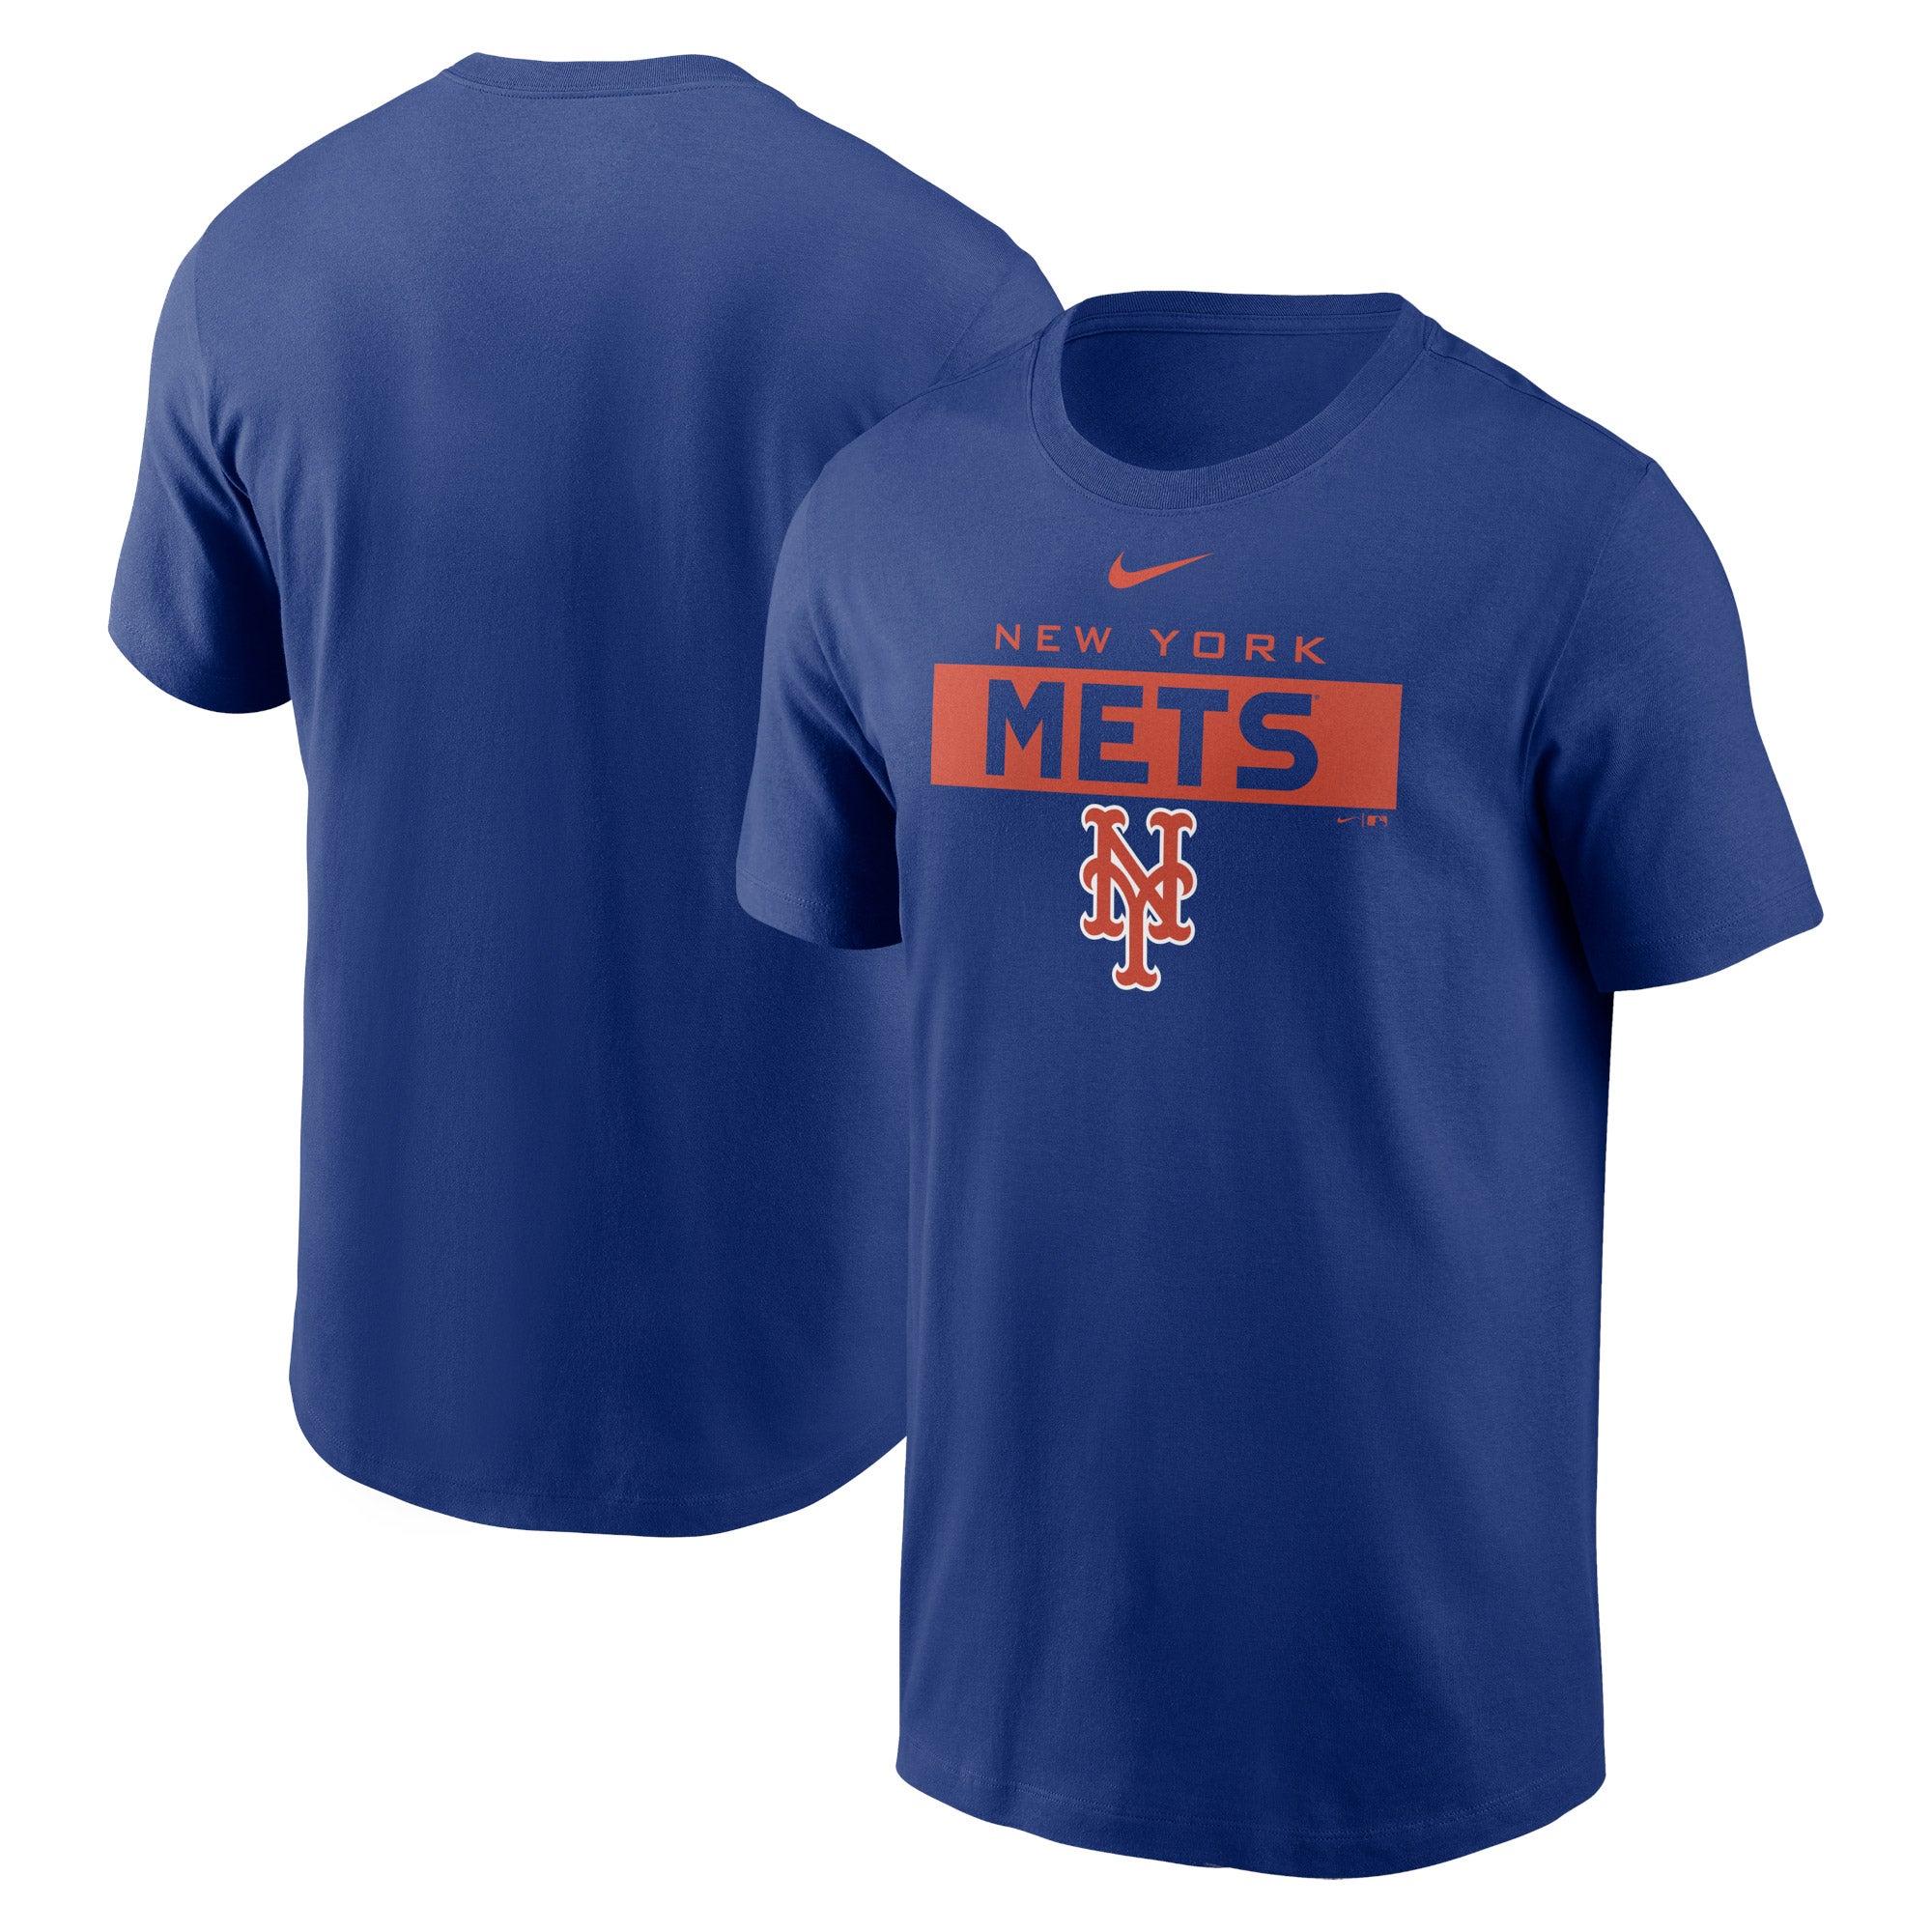 Nike Mets T-Shirt - Men's